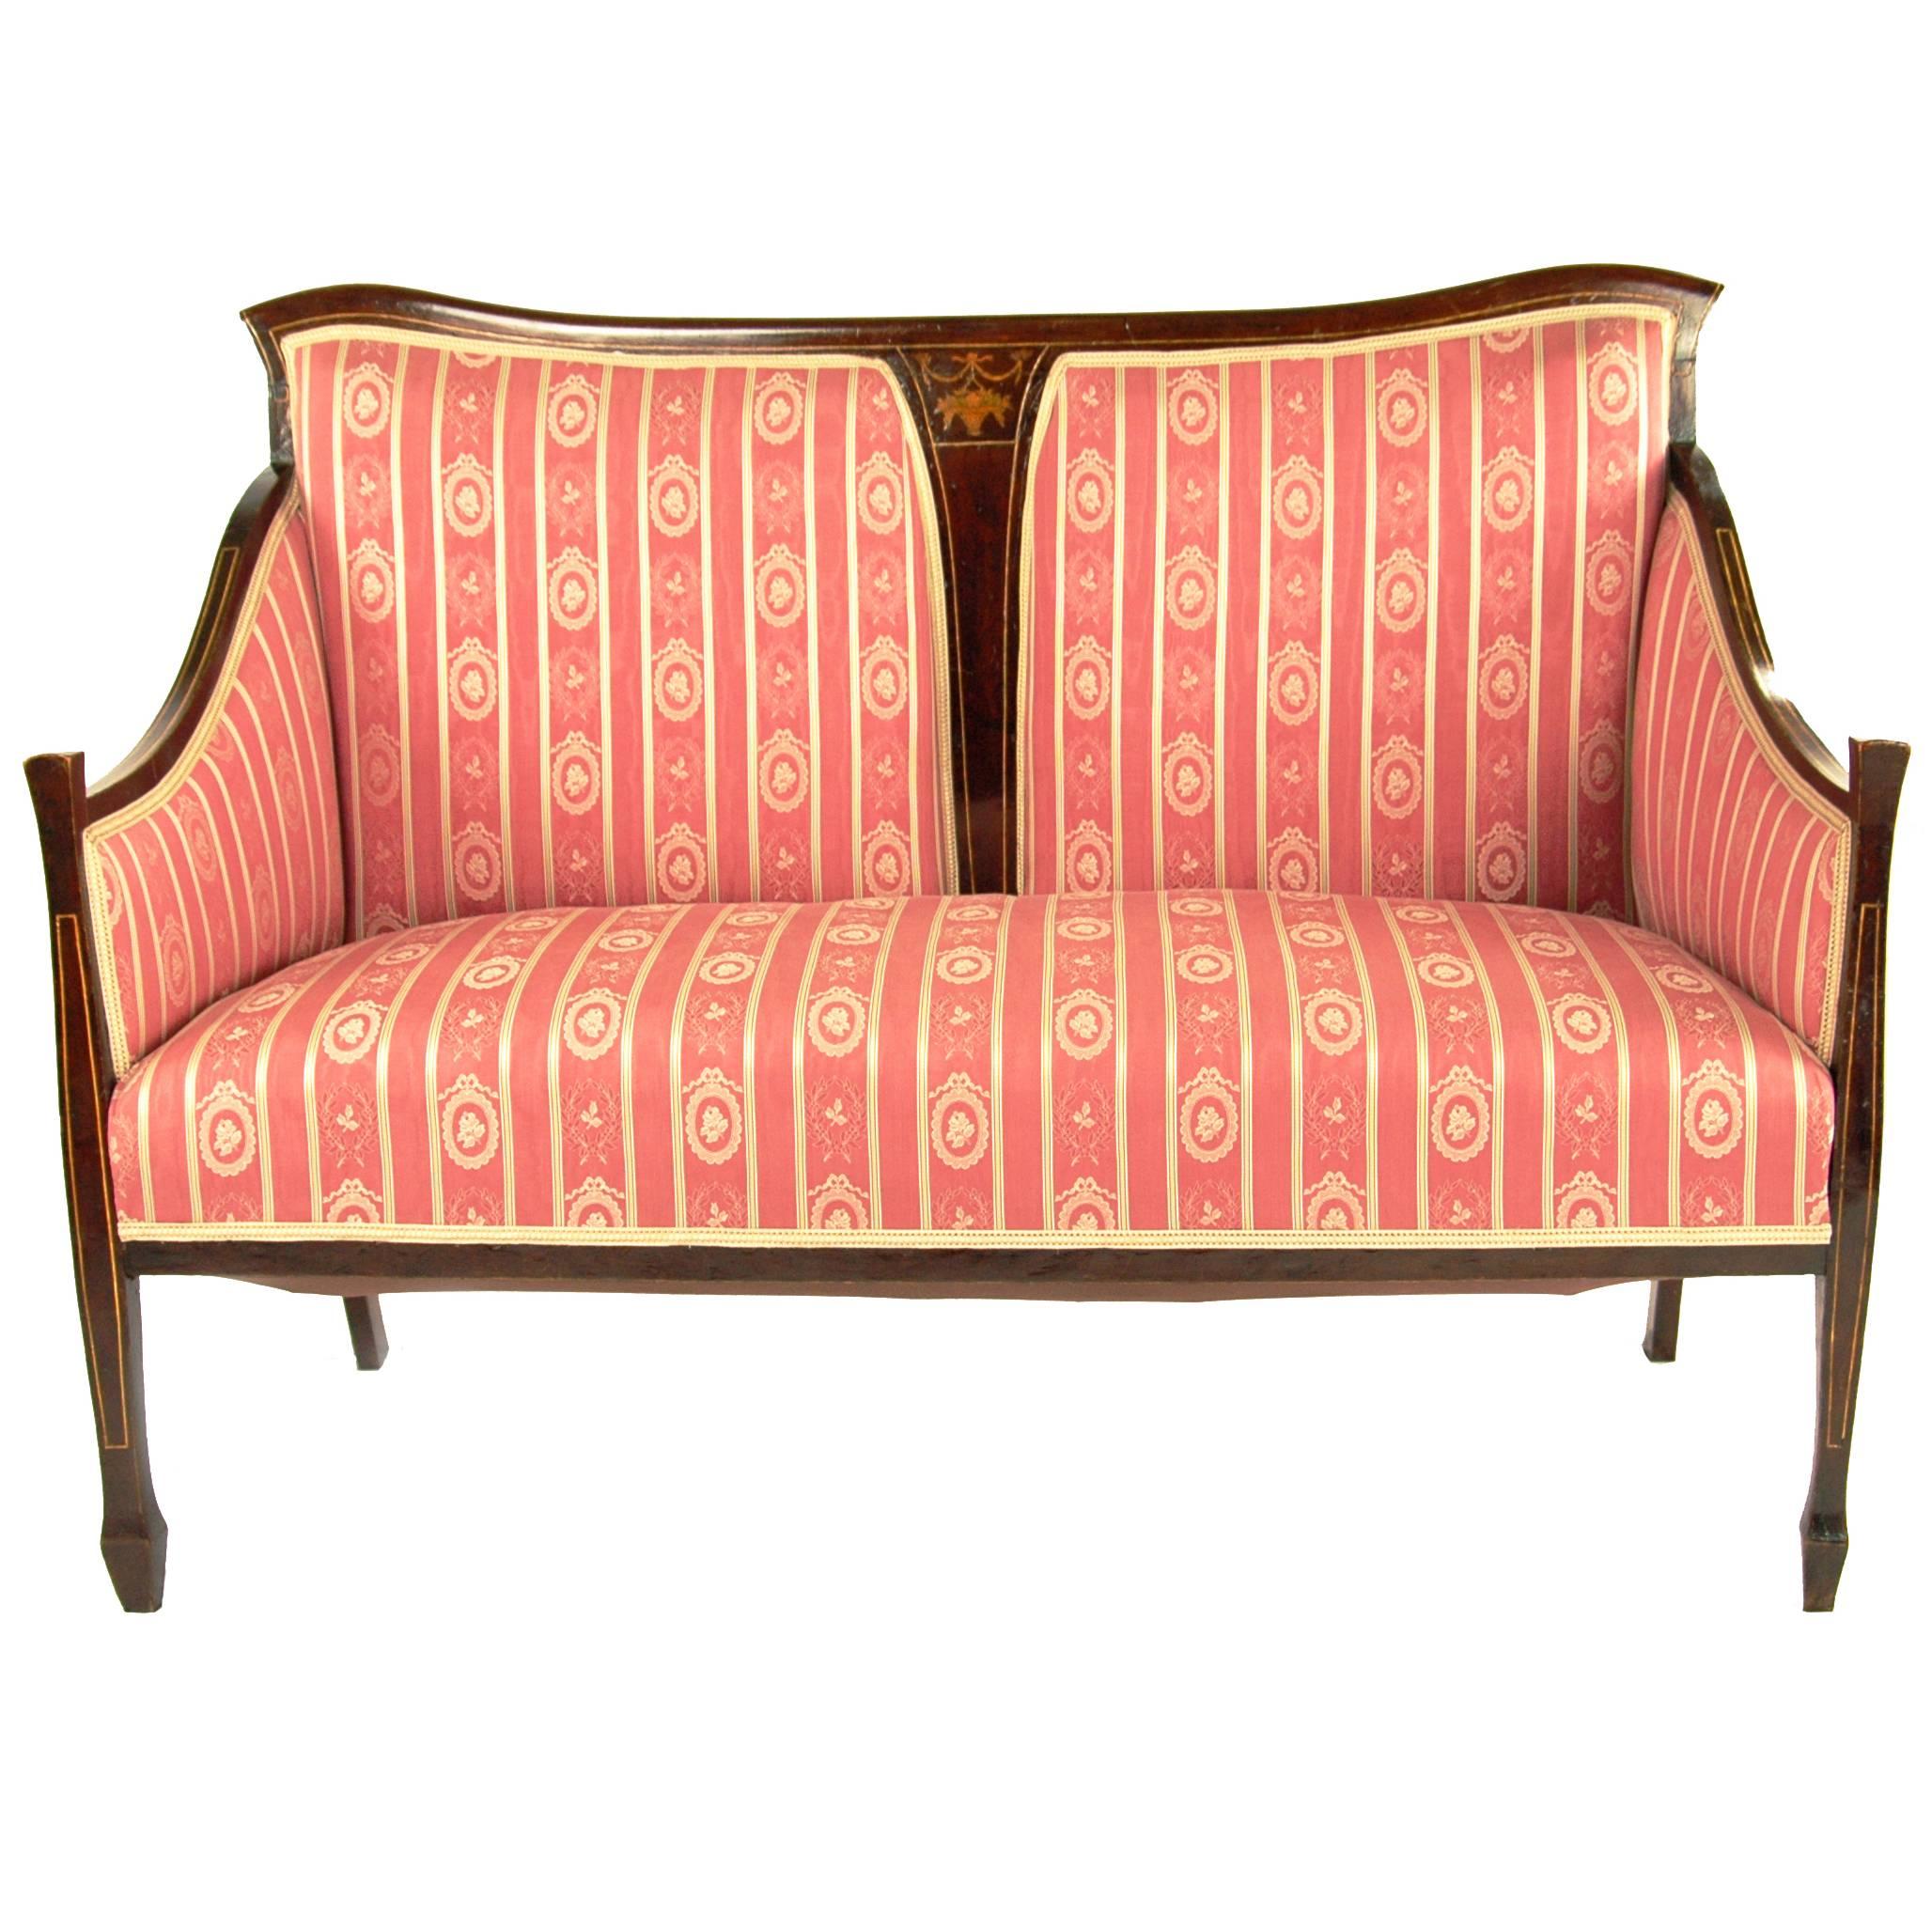 Two-Seat Sofa, England, UK, Second Half 19th Century, Mahogany, Inlaid Works